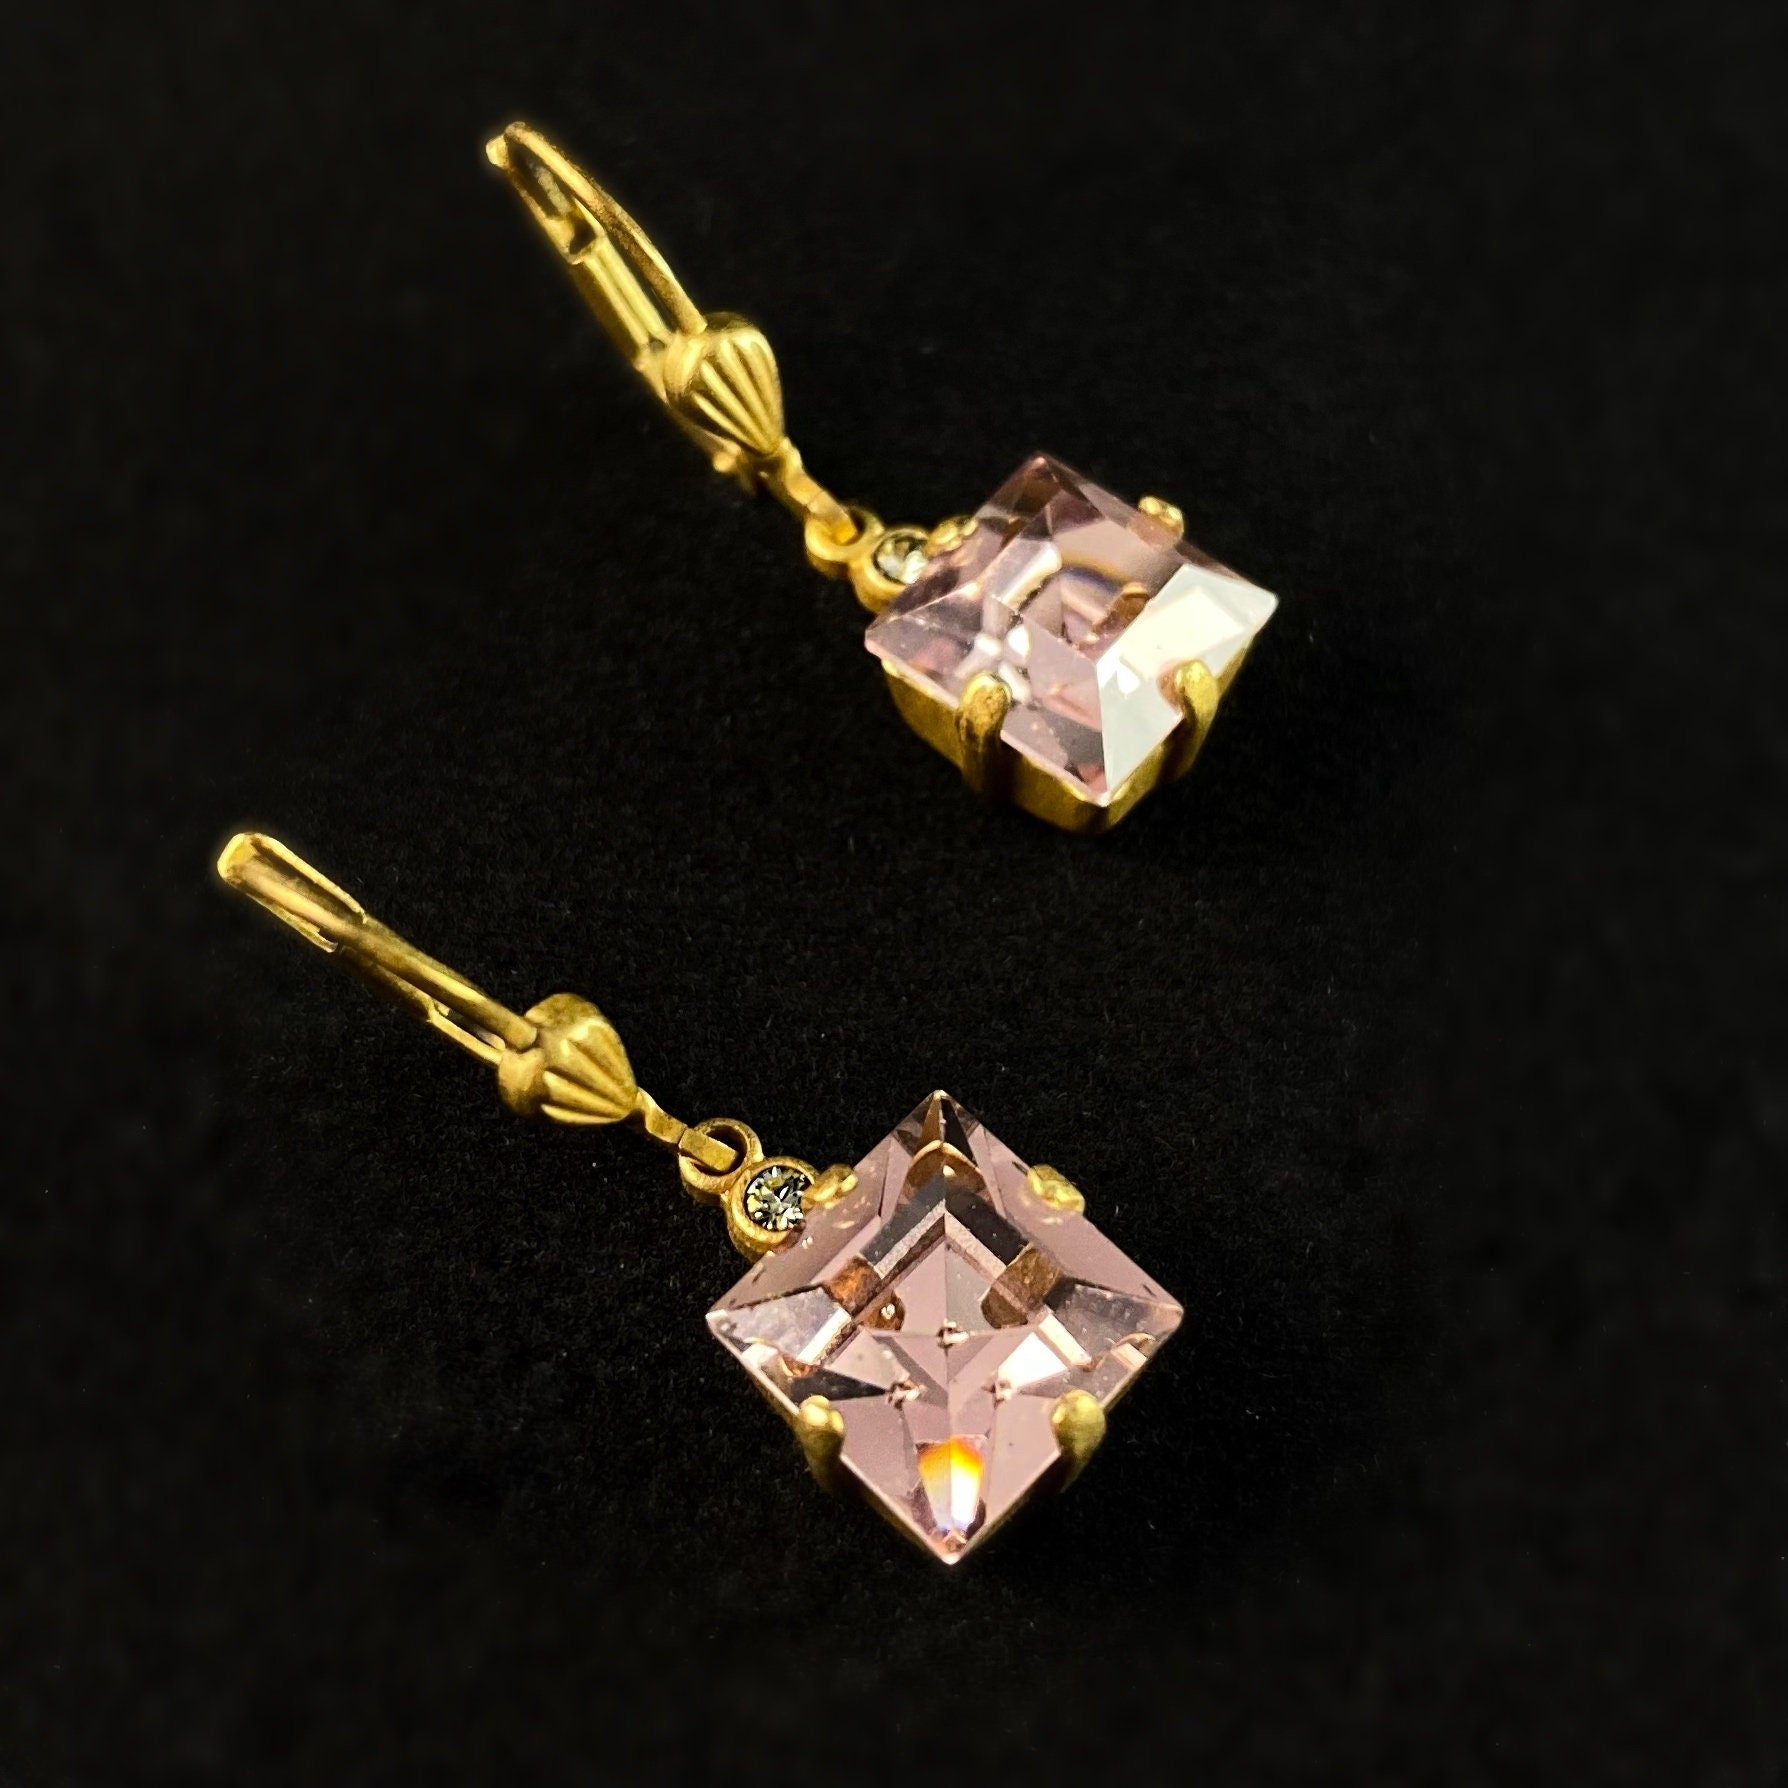 Square Cut Swarovski Crystal Drop Earrings, Pink/Purple - La Vie Parisienne by Catherine Popesco